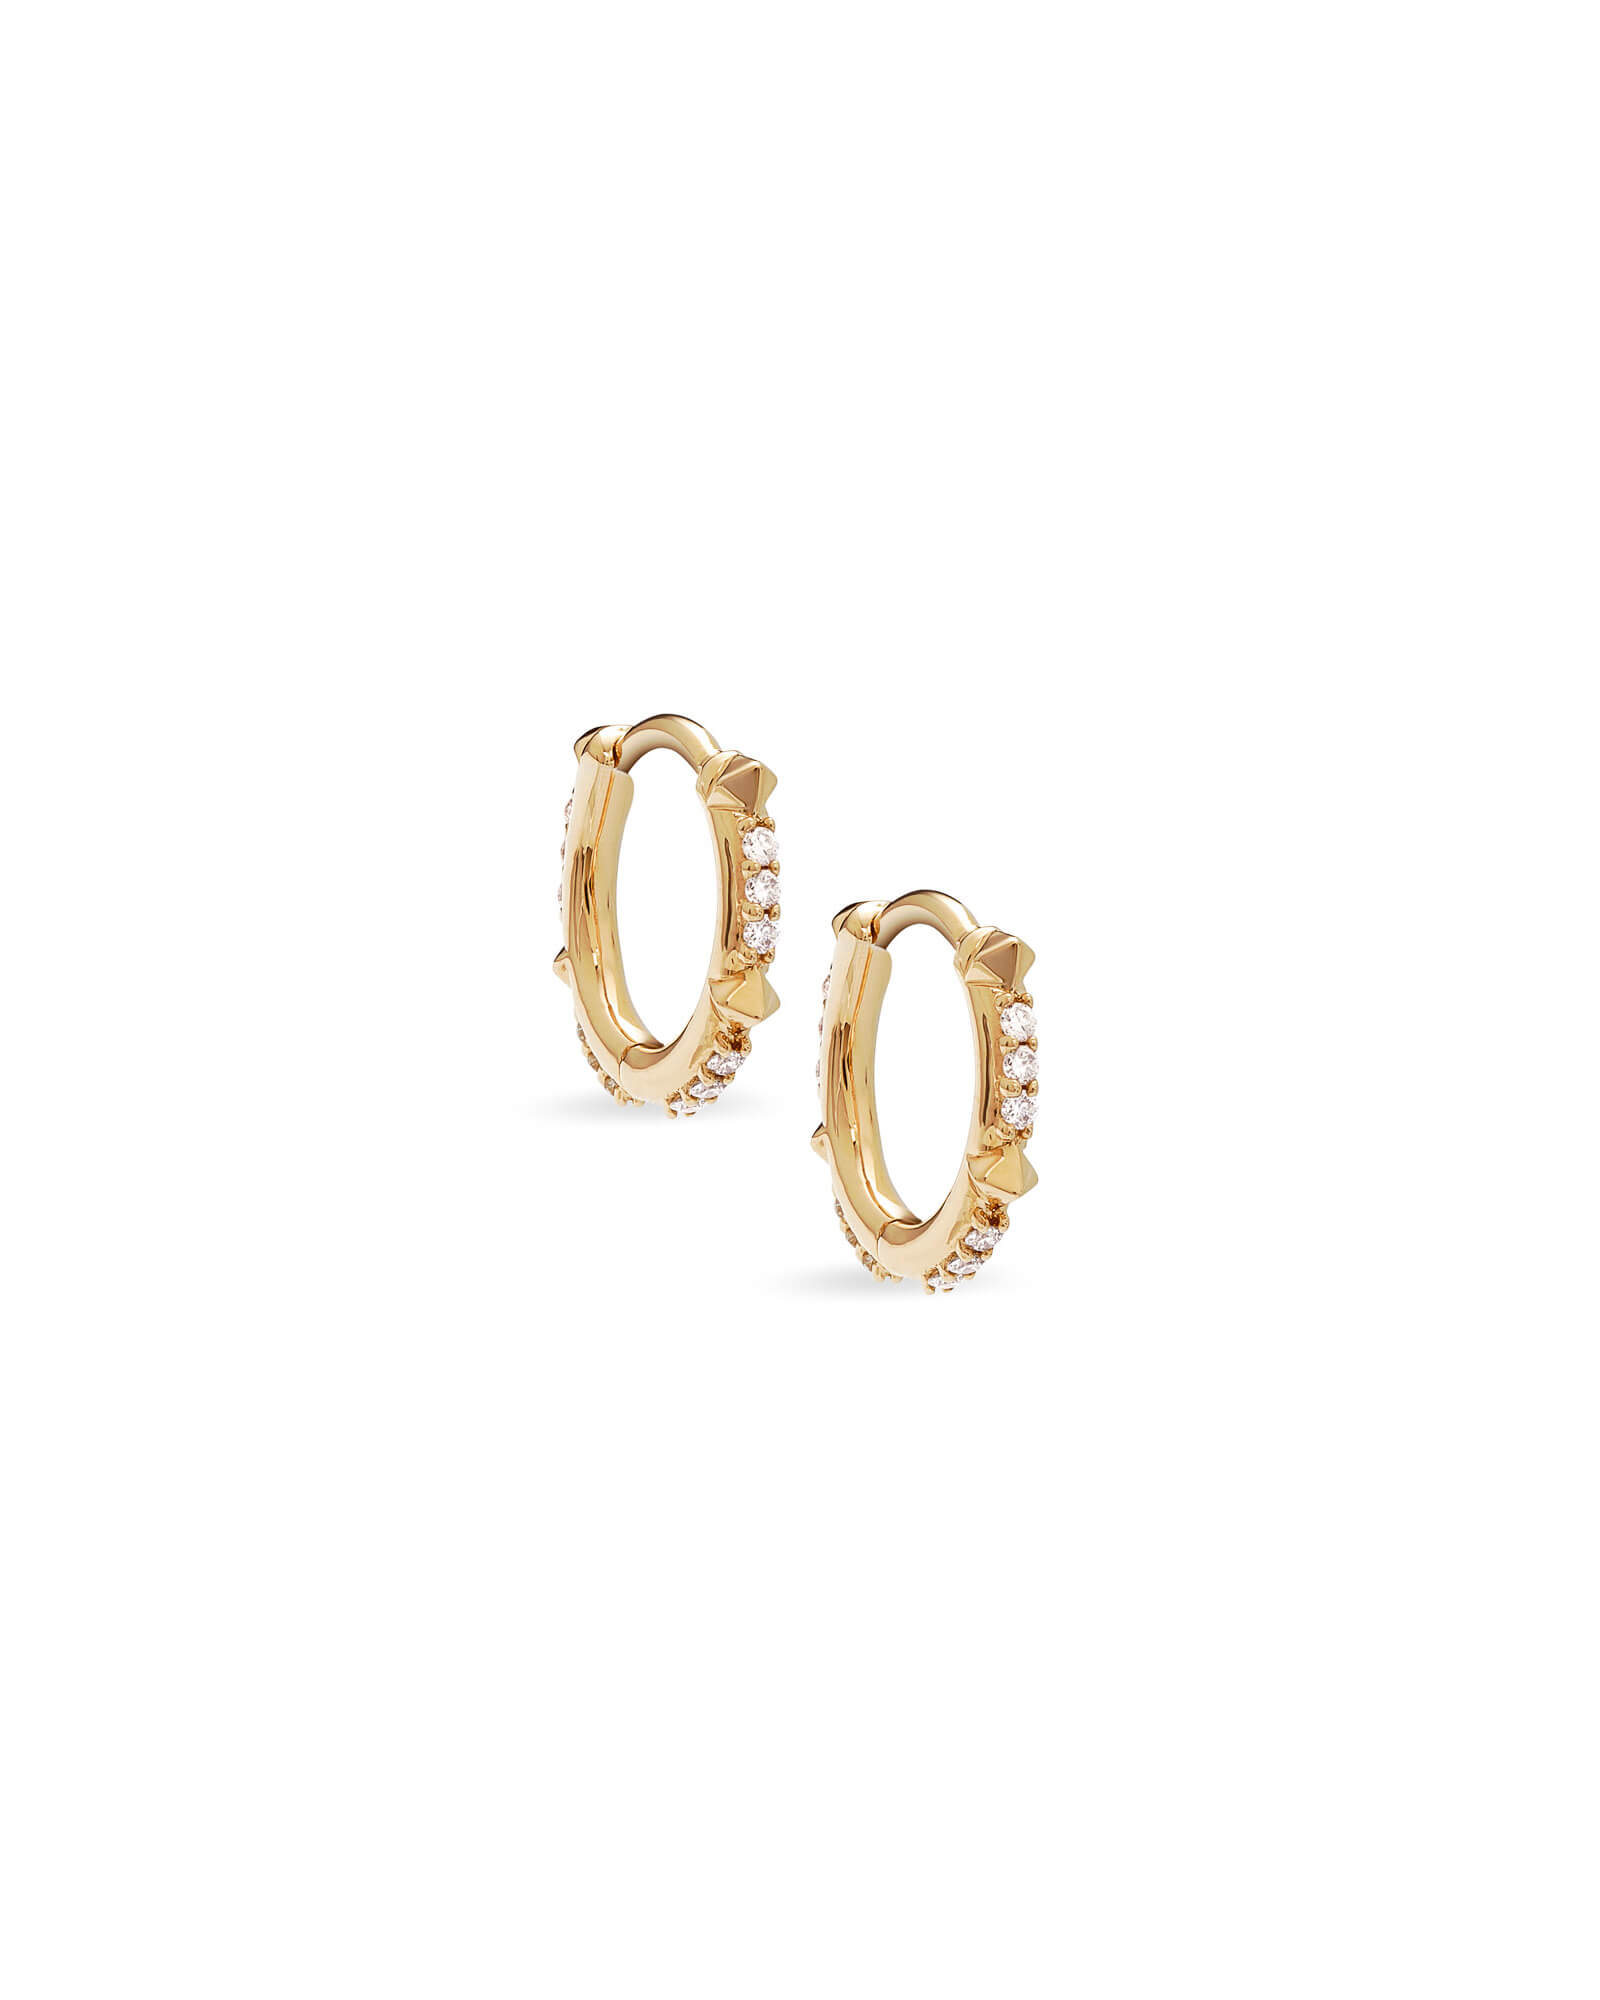 Kendra Scott Jett 14k Yellow Gold Huggie Earrings in White Diamond | Diamonds